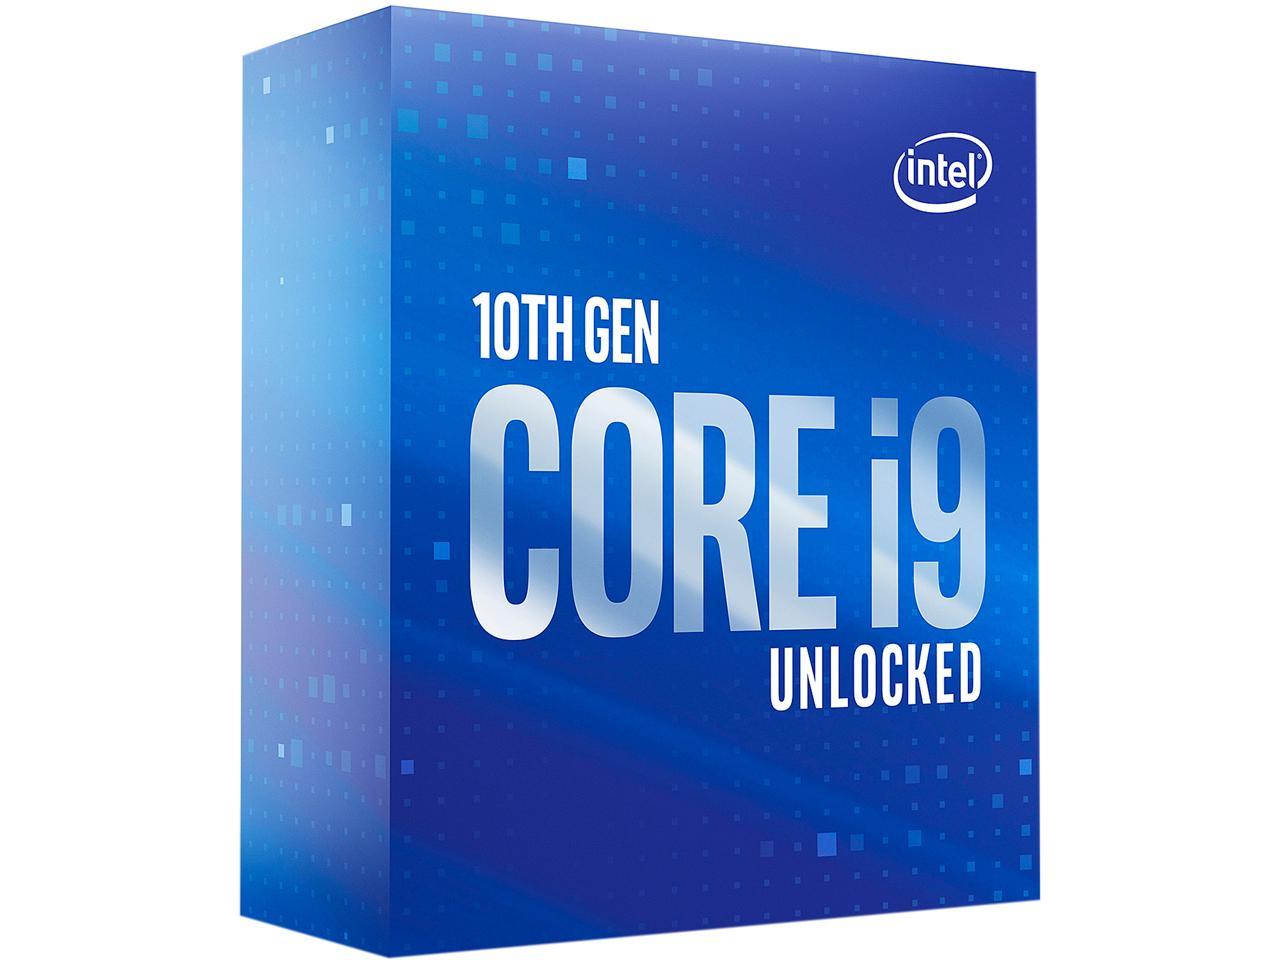 Intel Core i9-10900K - Core i9 10th Gen Comet Lake 10-Core 3.7 GHz LGA 1200 125W Intel UHD Graphics 630 Desktop Processor - BX8070110900K - image 1 of 7